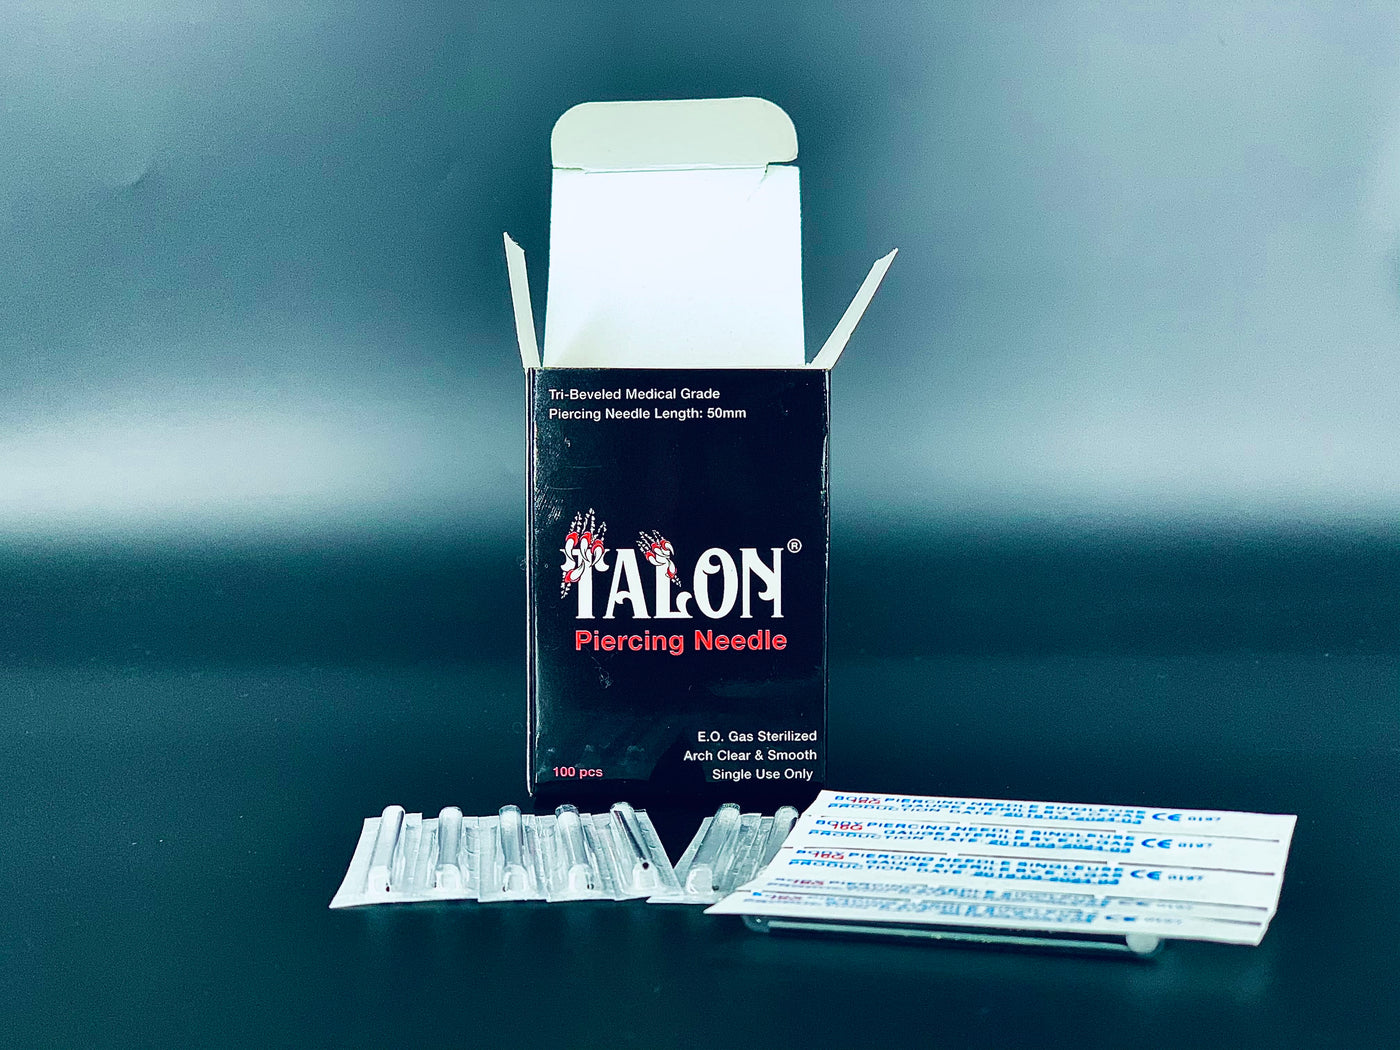 Talon Piercing Needles